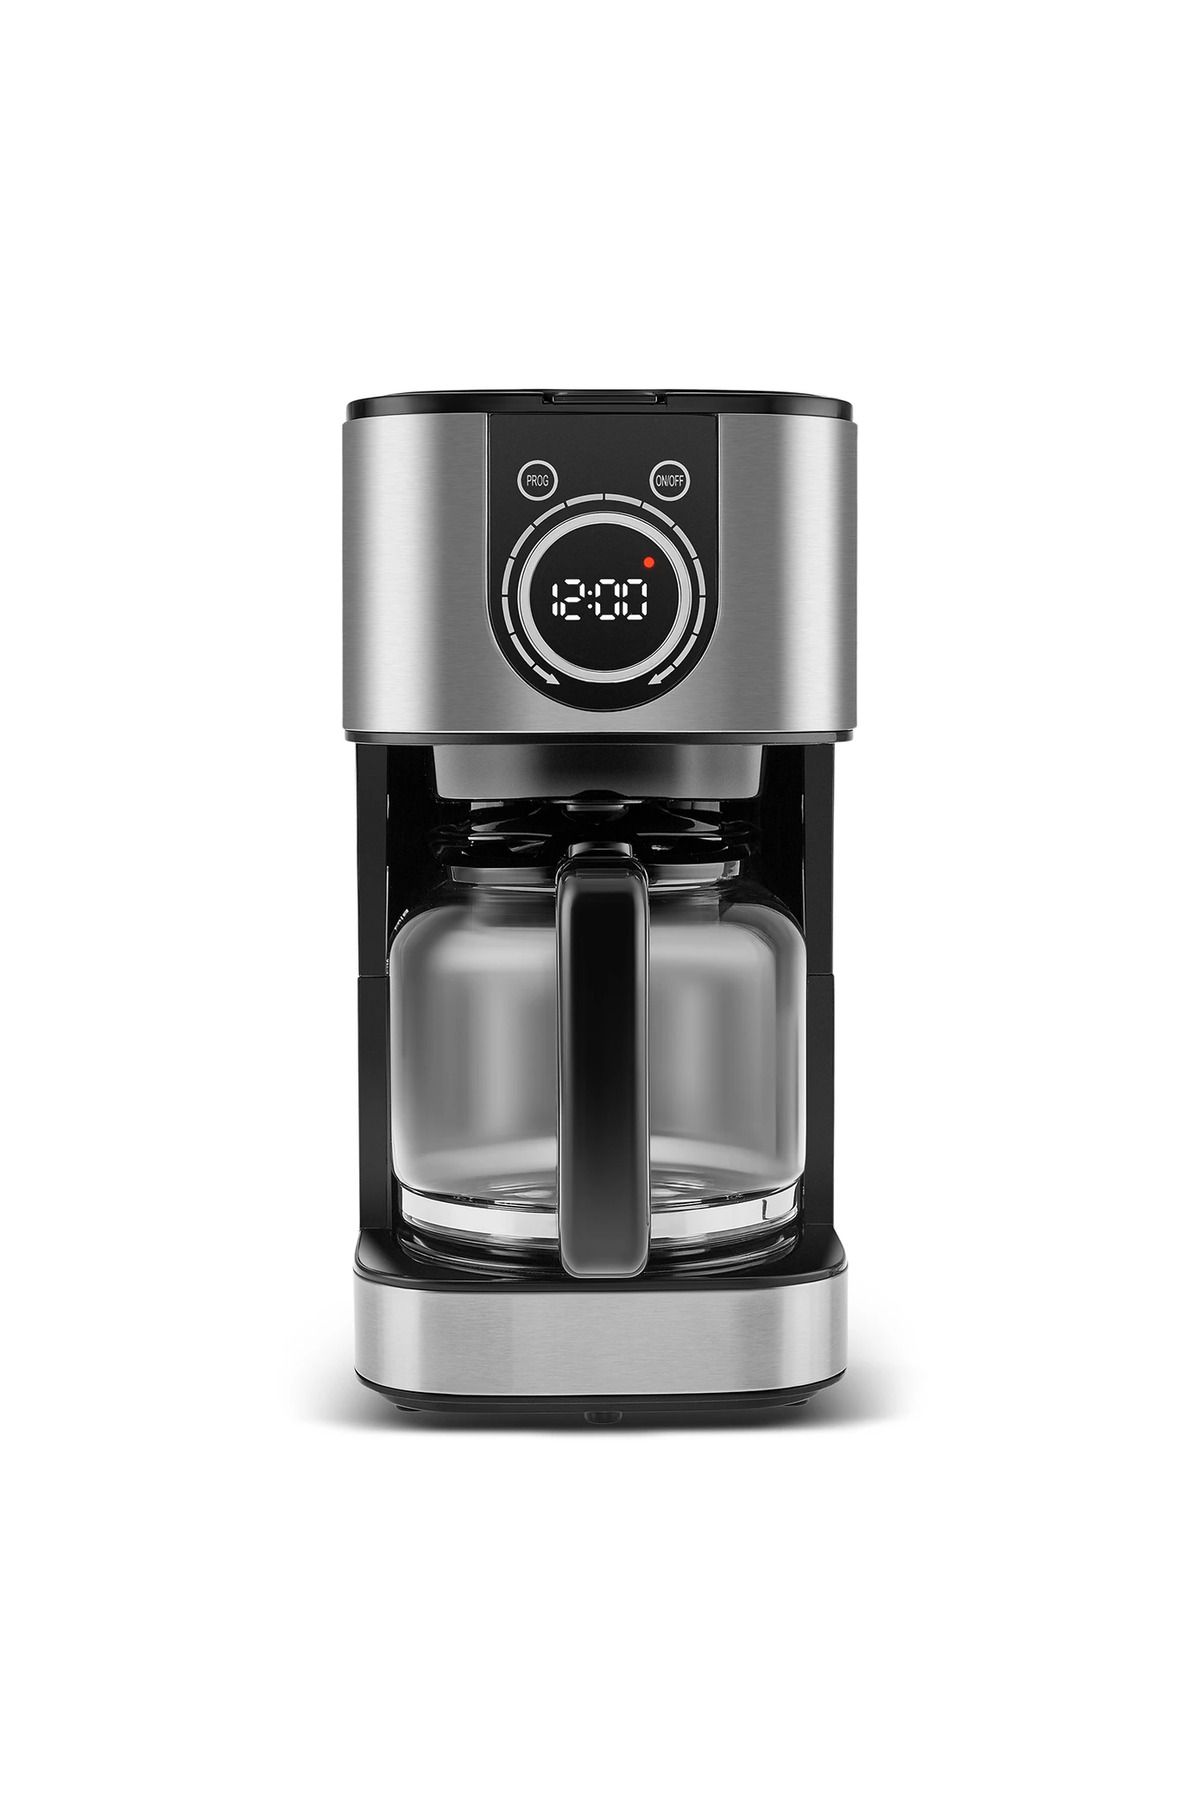 Karaca 2303 Zaman Ayarlı Otomatik Inox Filtre Kahve Makinesi XL 15 Fincan